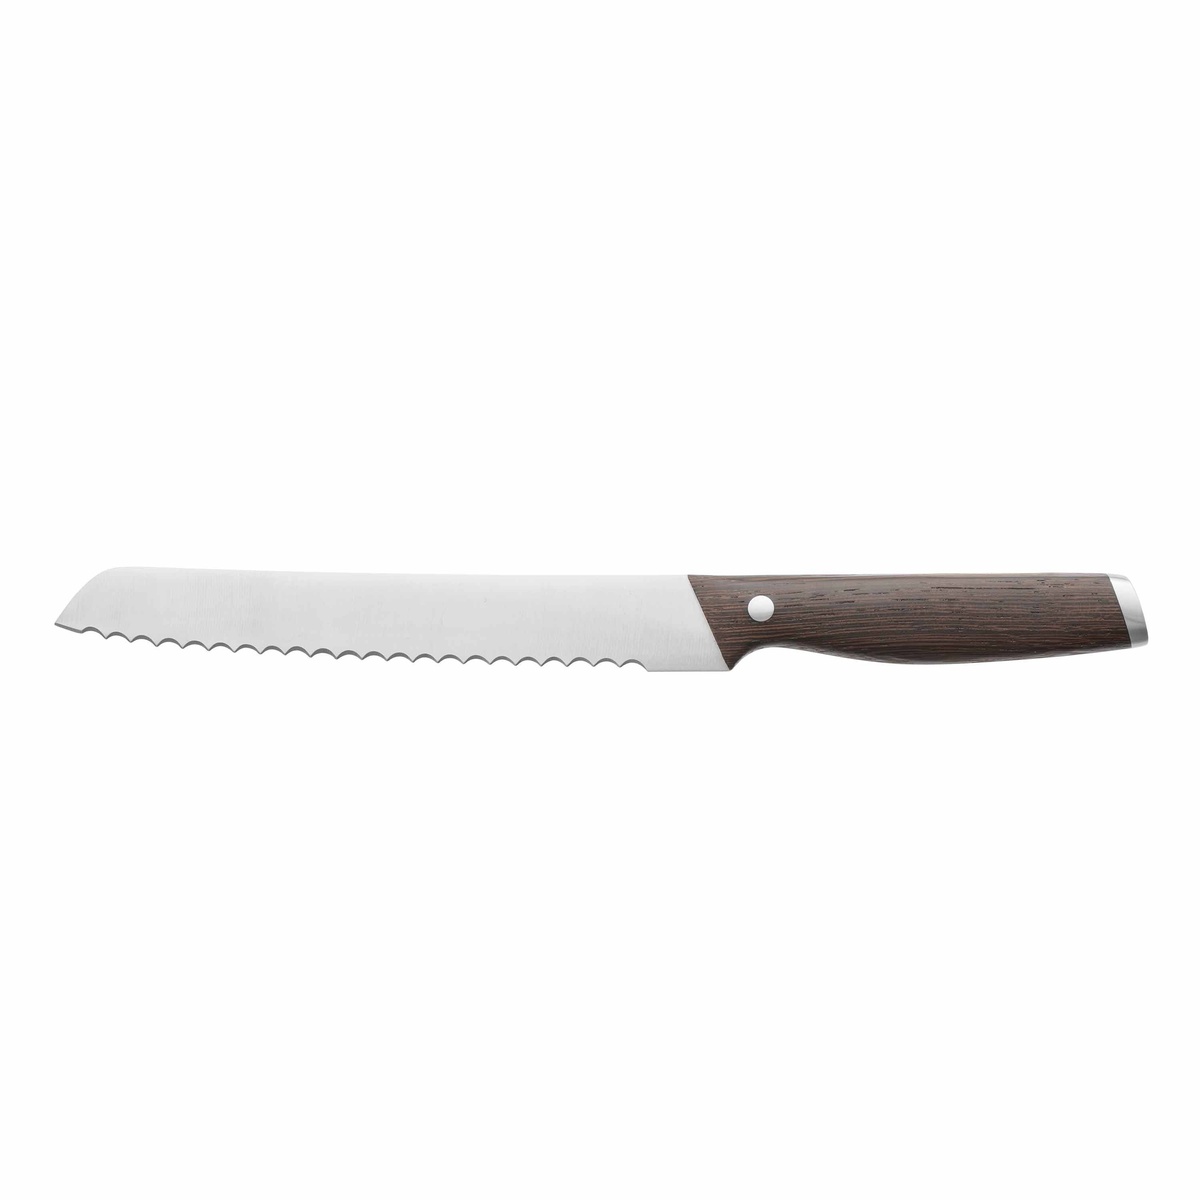 Нож BergHOFF Redwood 20 см для хлеба фото